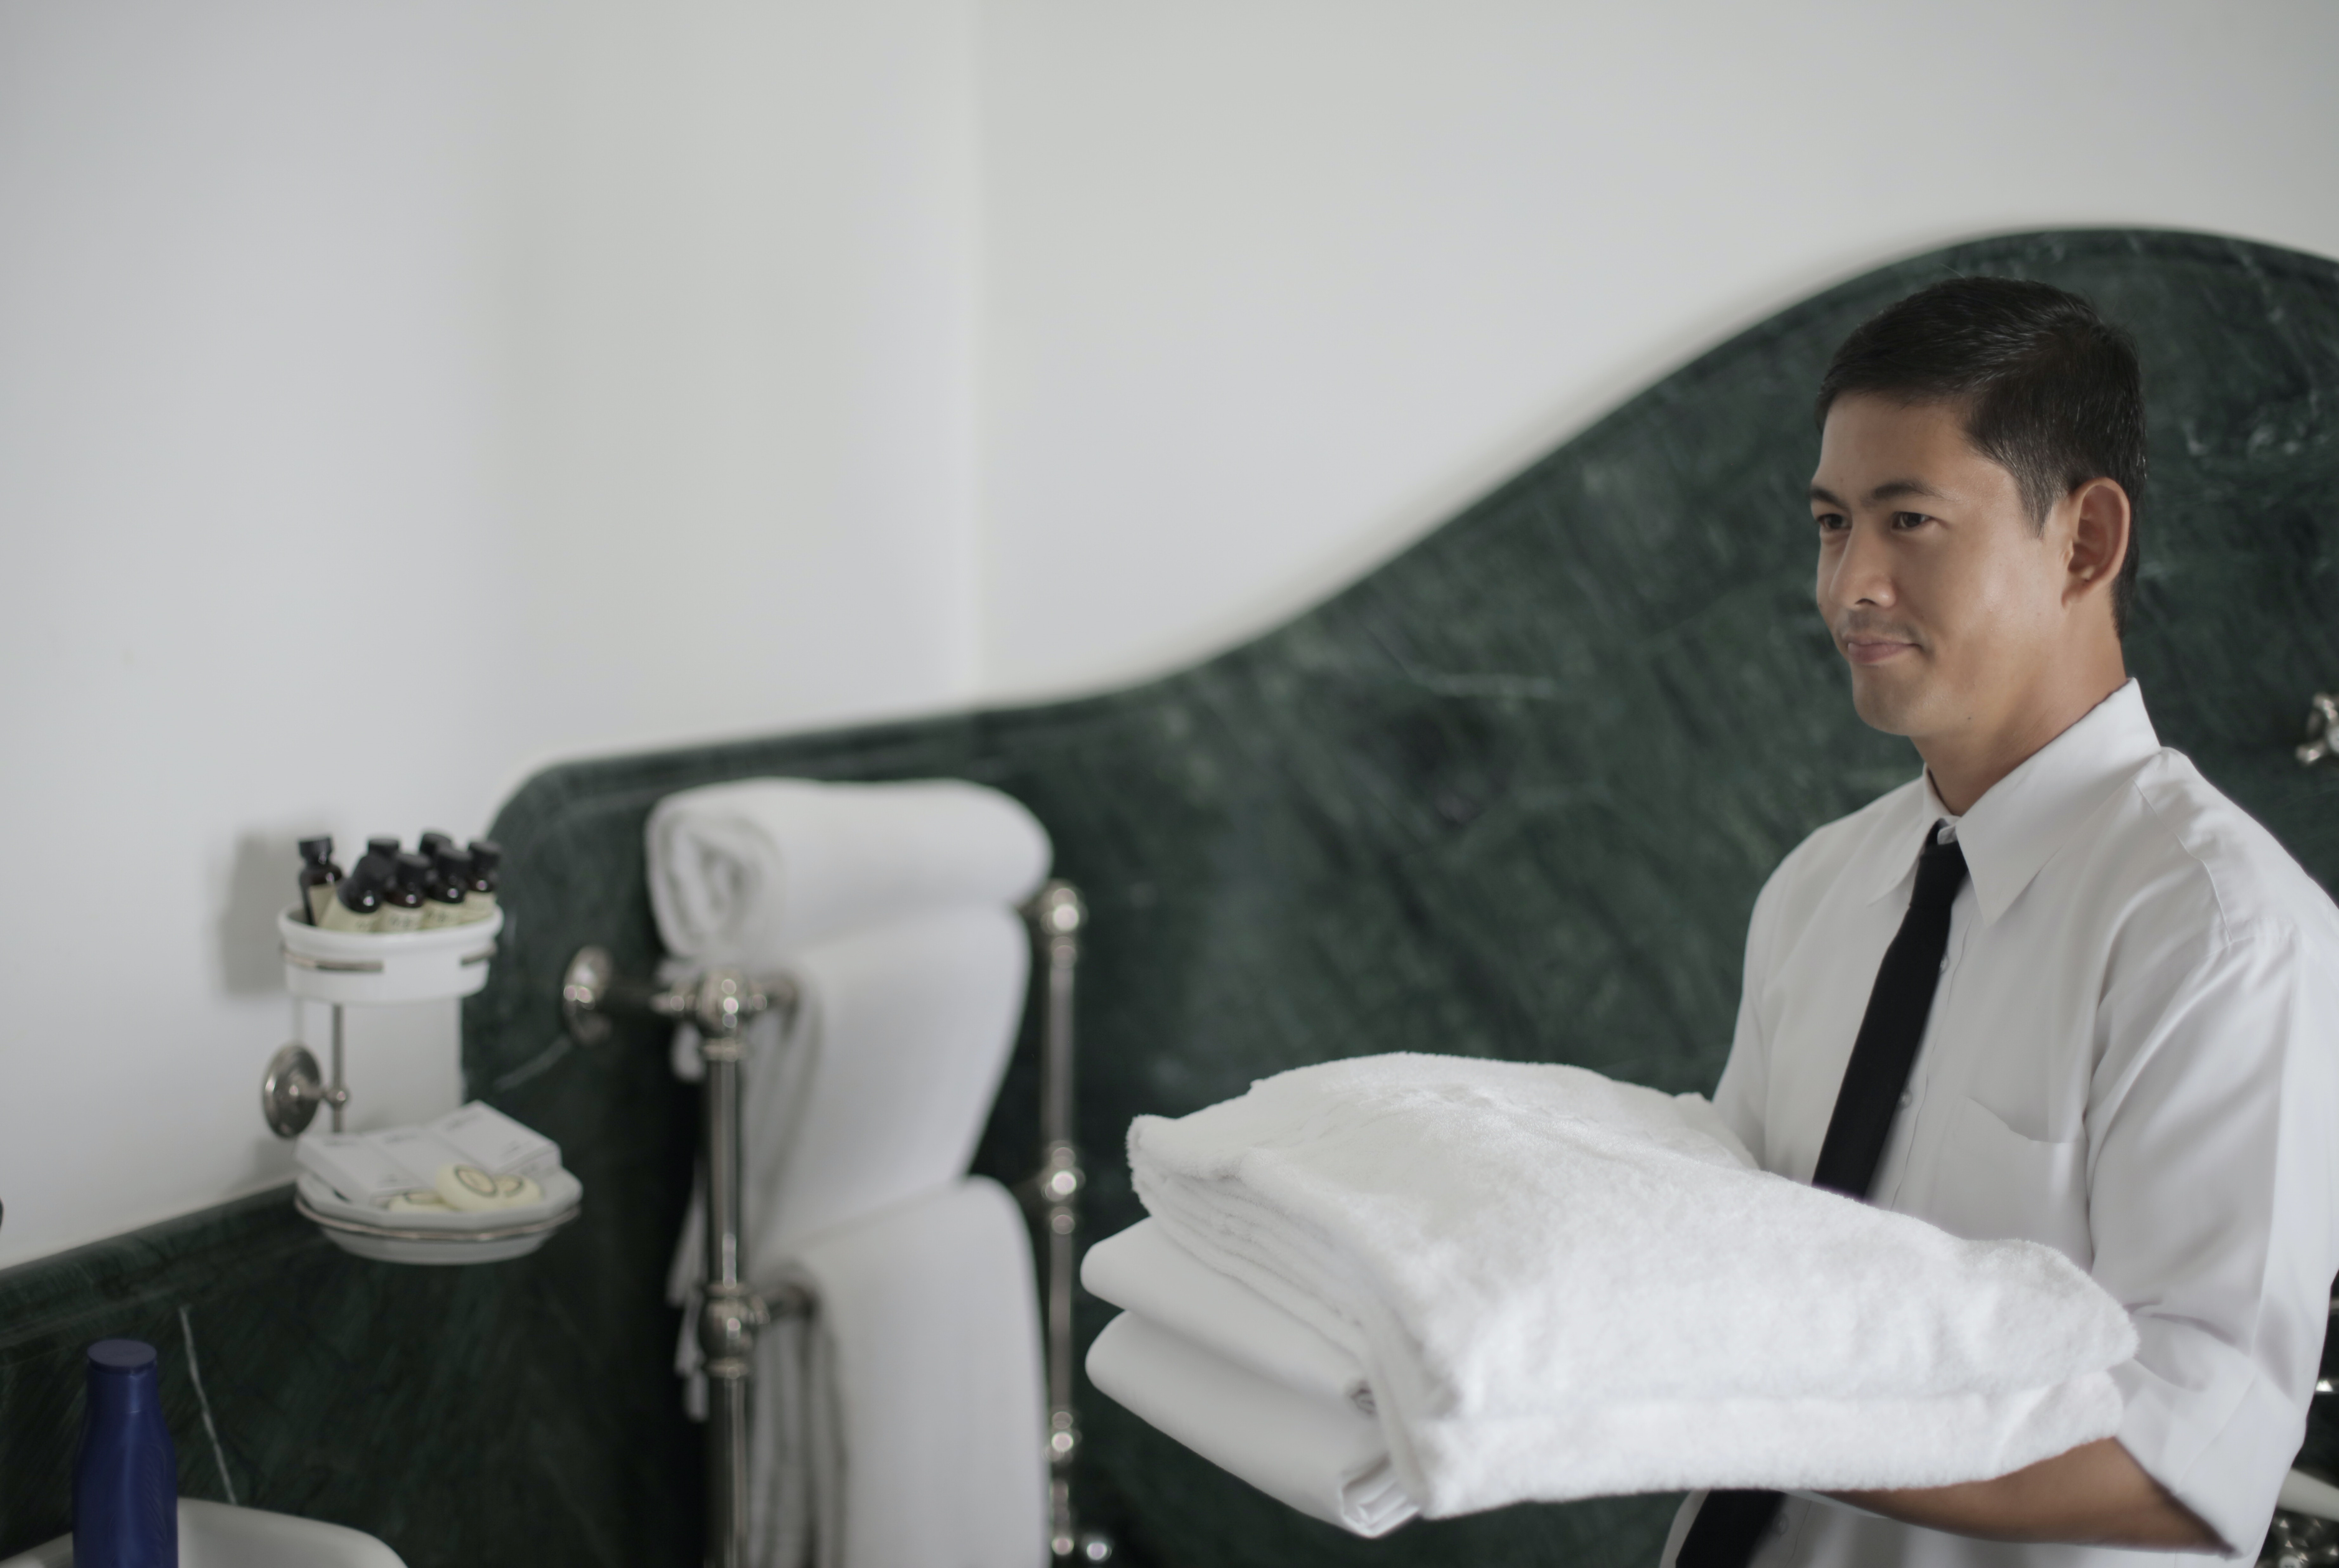 A hotel housekeeper | Source: Pexels